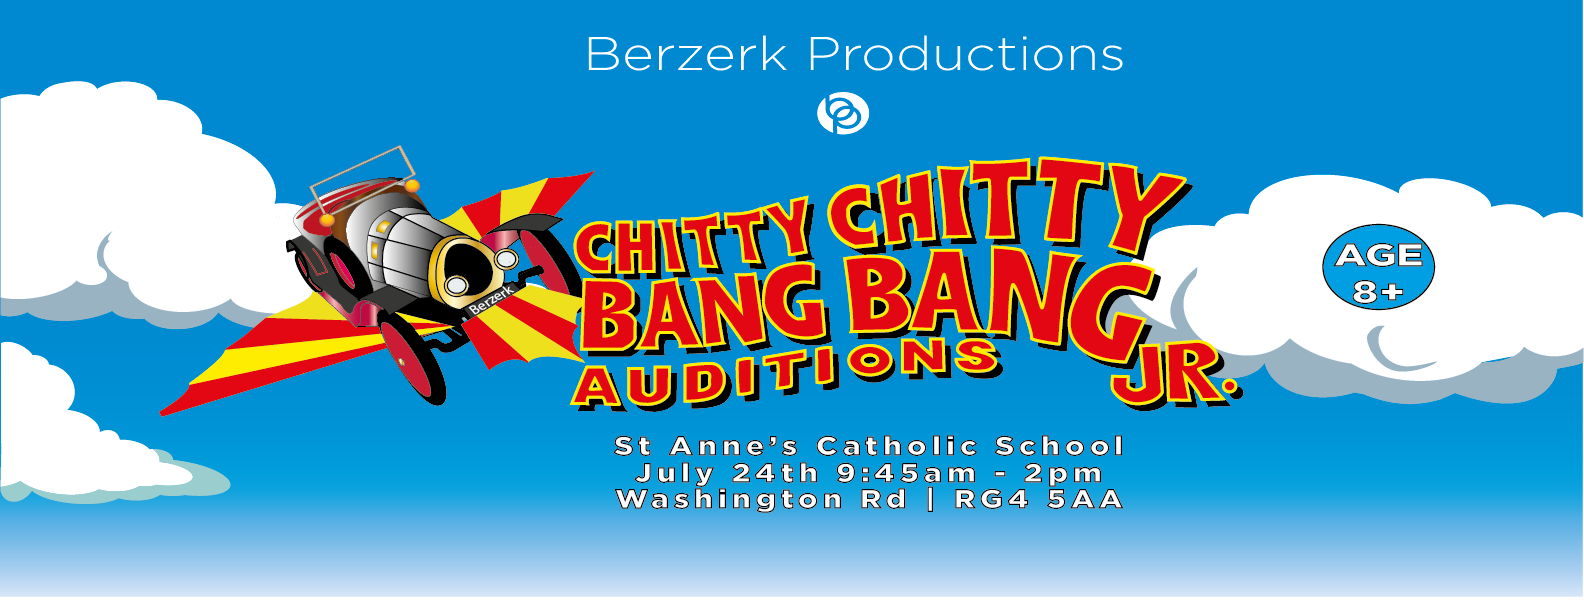 berzerk-production--chitty-chitty-bang-bang-audition-2022-banner